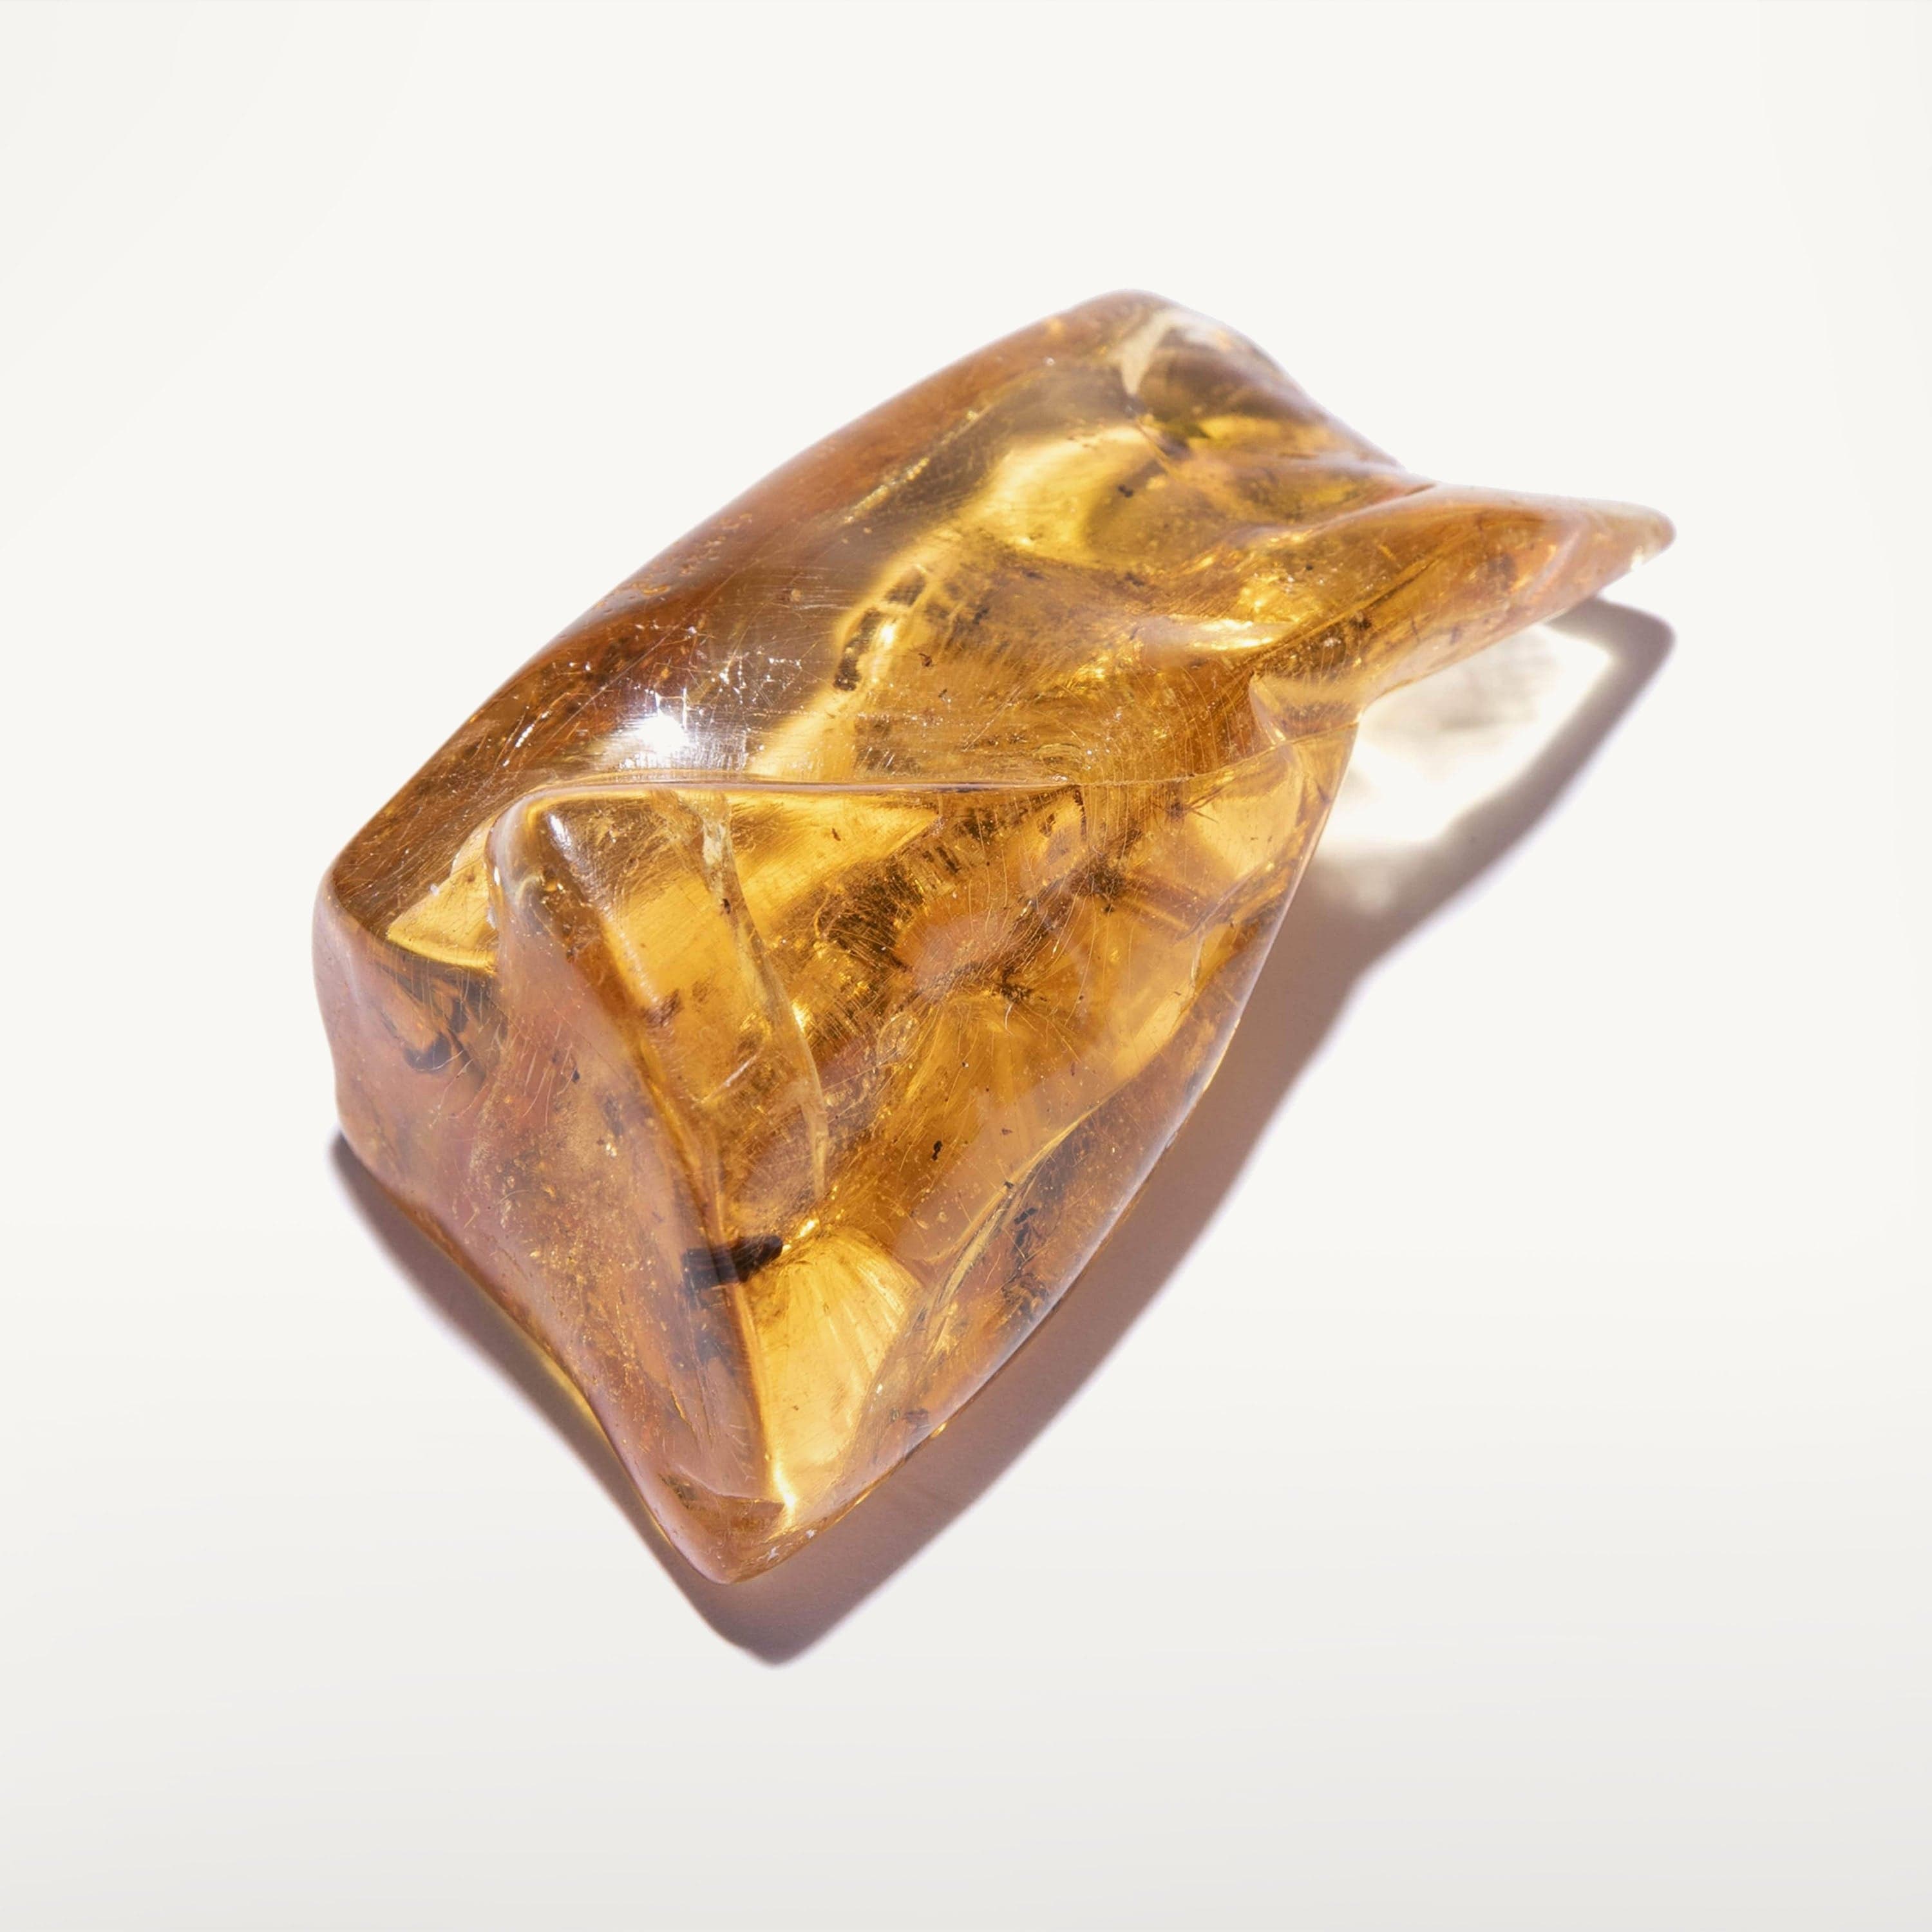 Kalifano Amber Natural Copal Amber Healing Stone from Columbia and Madagascar AMBER98